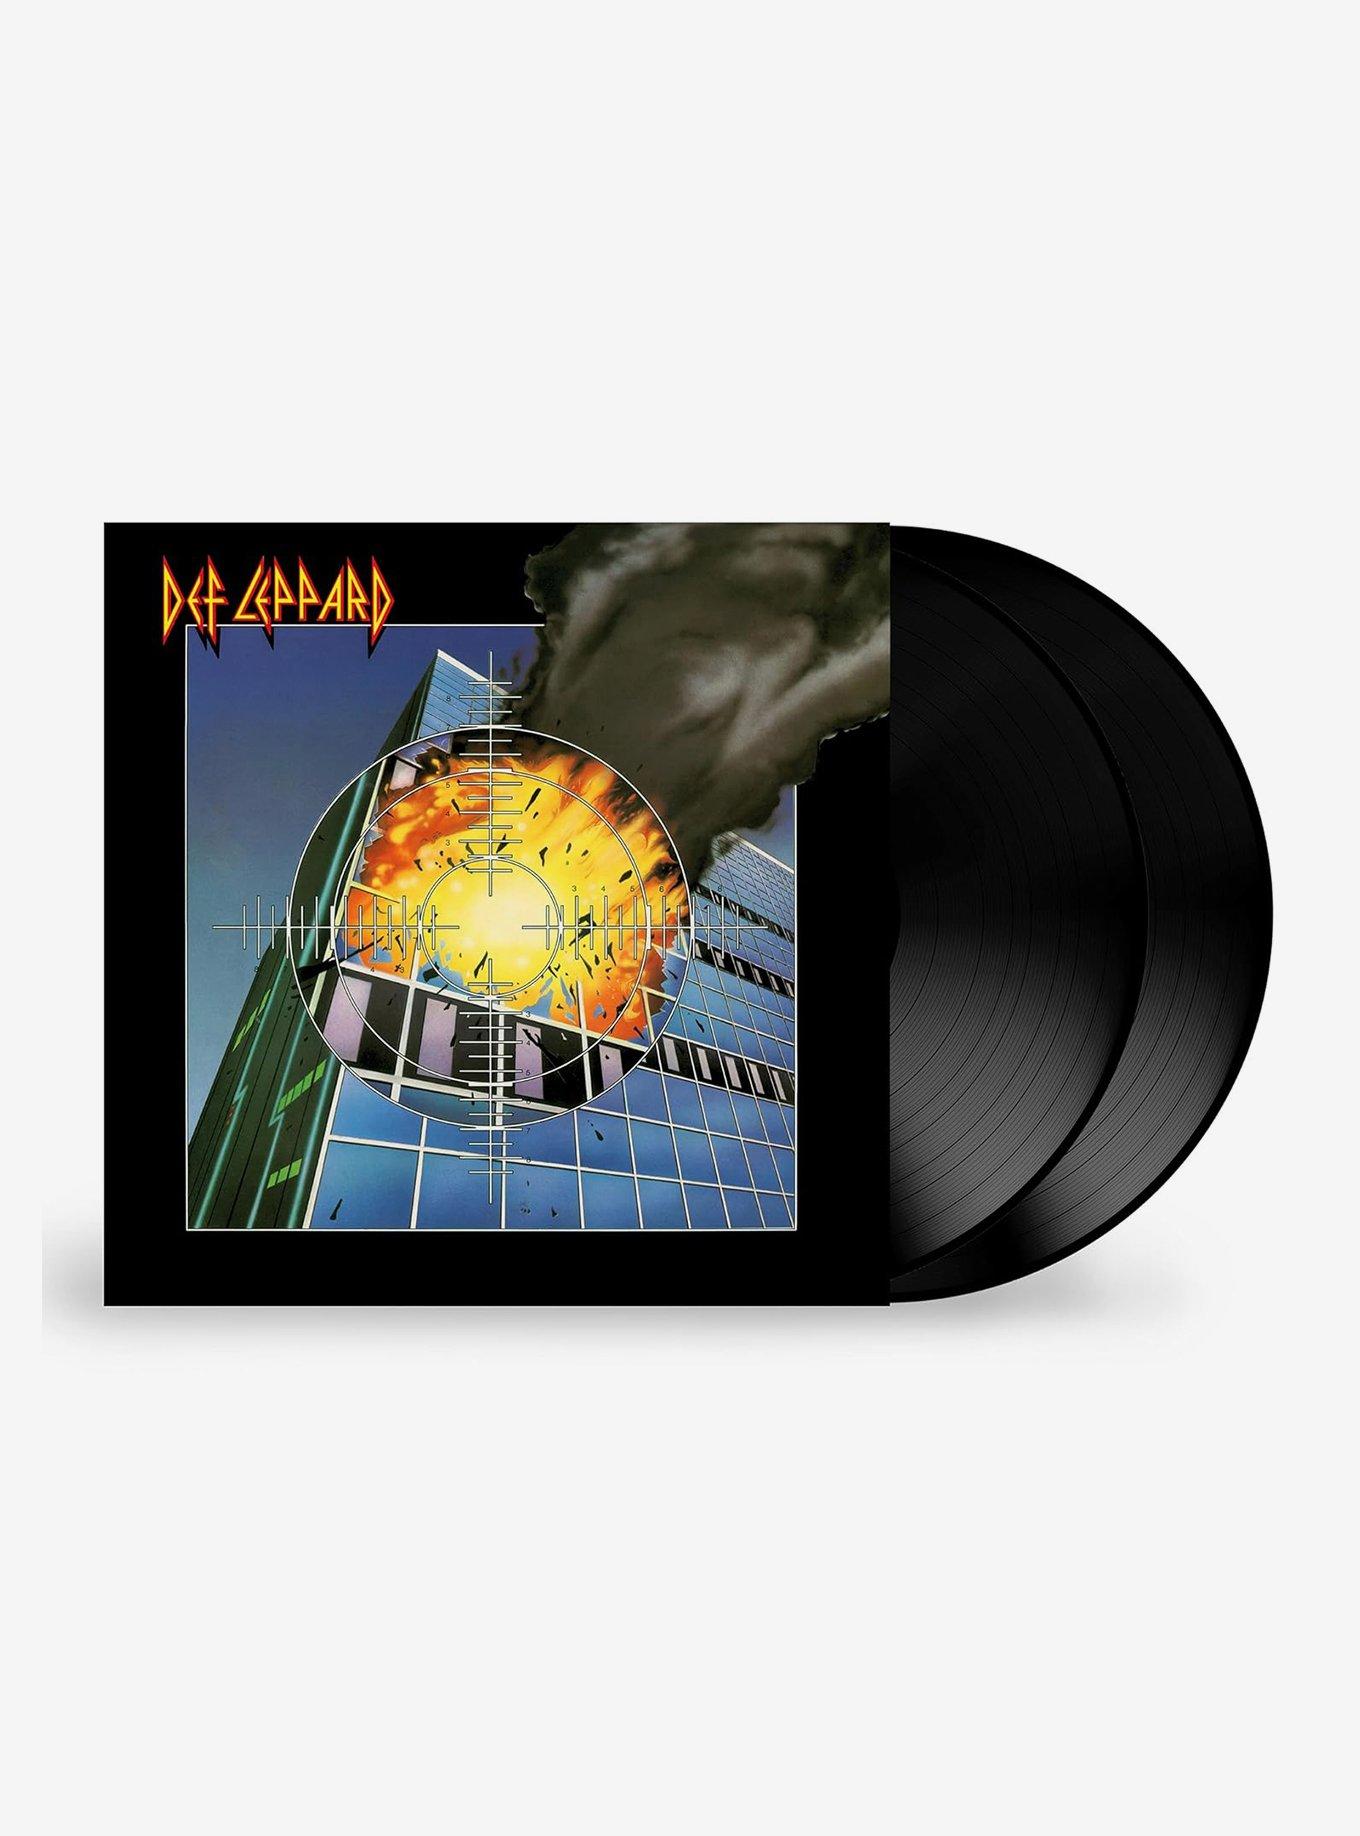 Def Leppard Pyromania (40th Anniversary) Vinyl LP